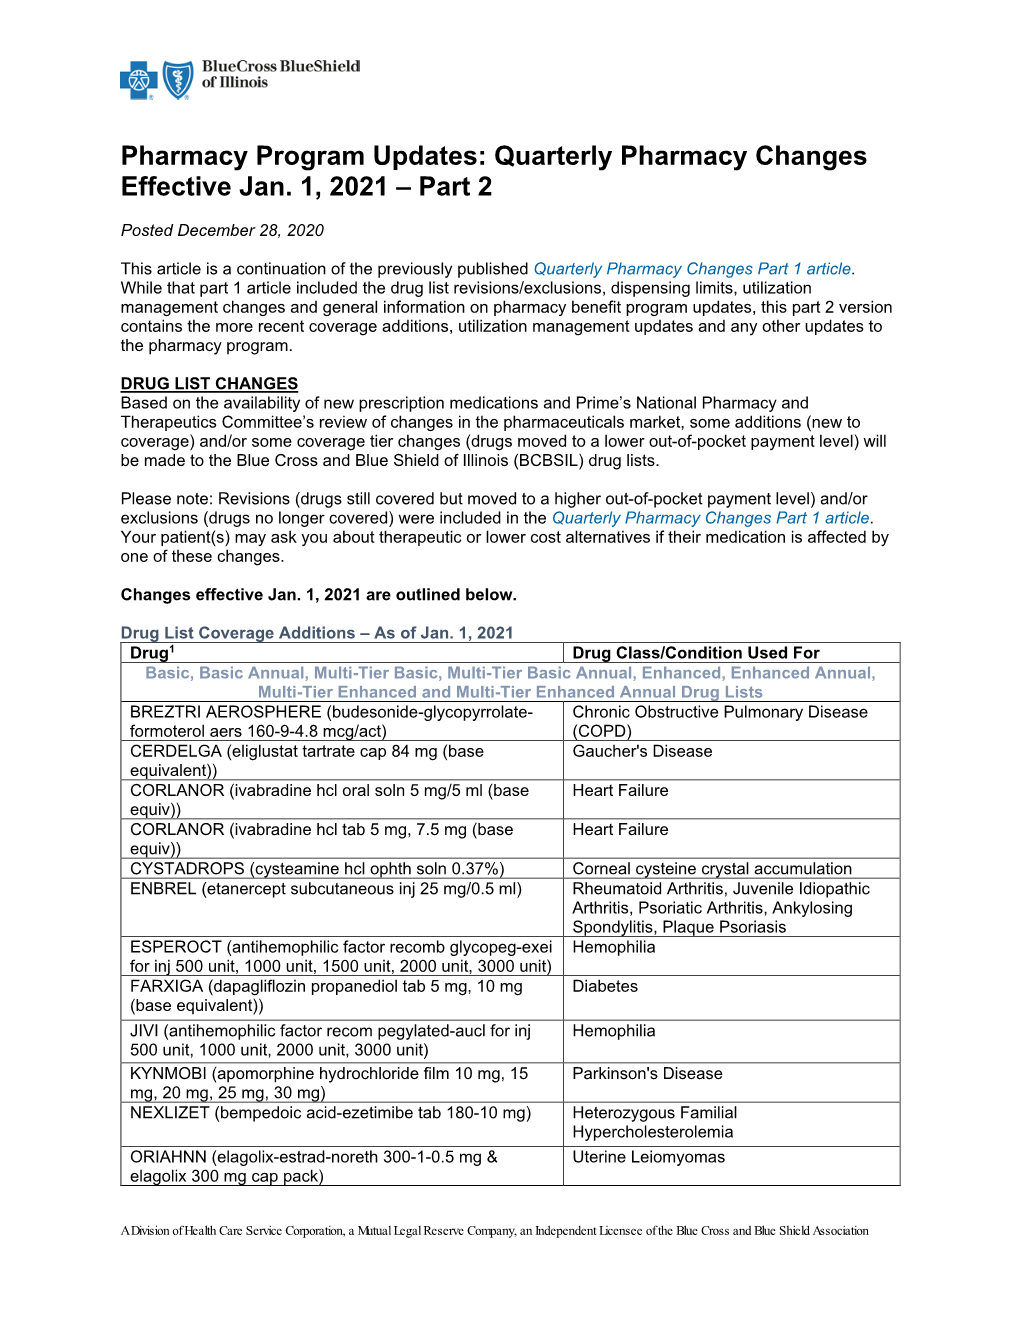 Quarterly Pharmacy Changes Effective Jan. 1, 2021 – Part 2